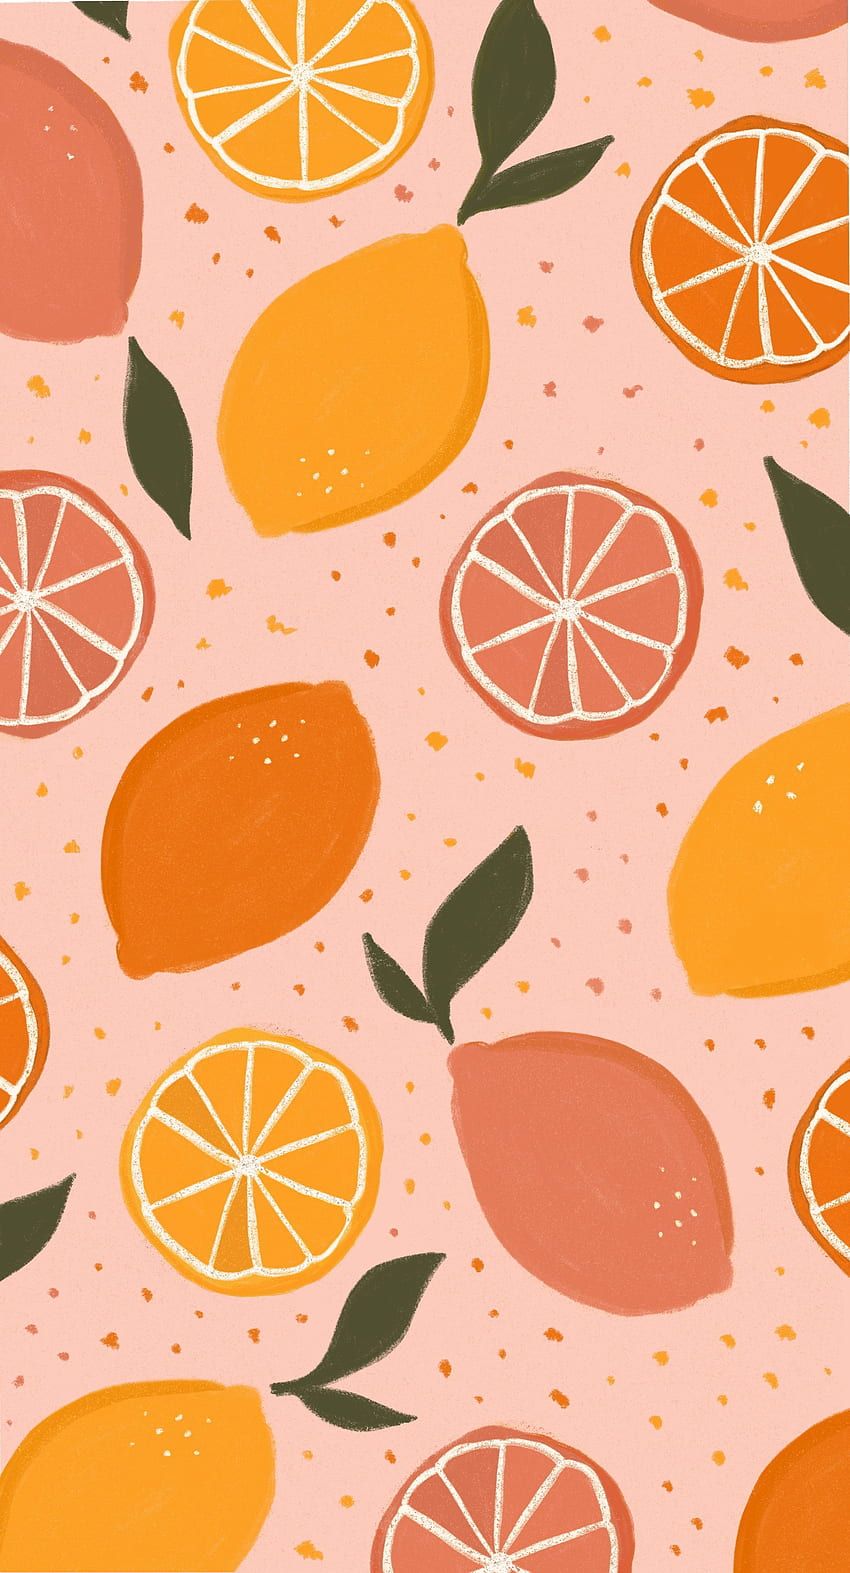 A pattern of oranges and lemons on pink - Fruit, pattern, lemon